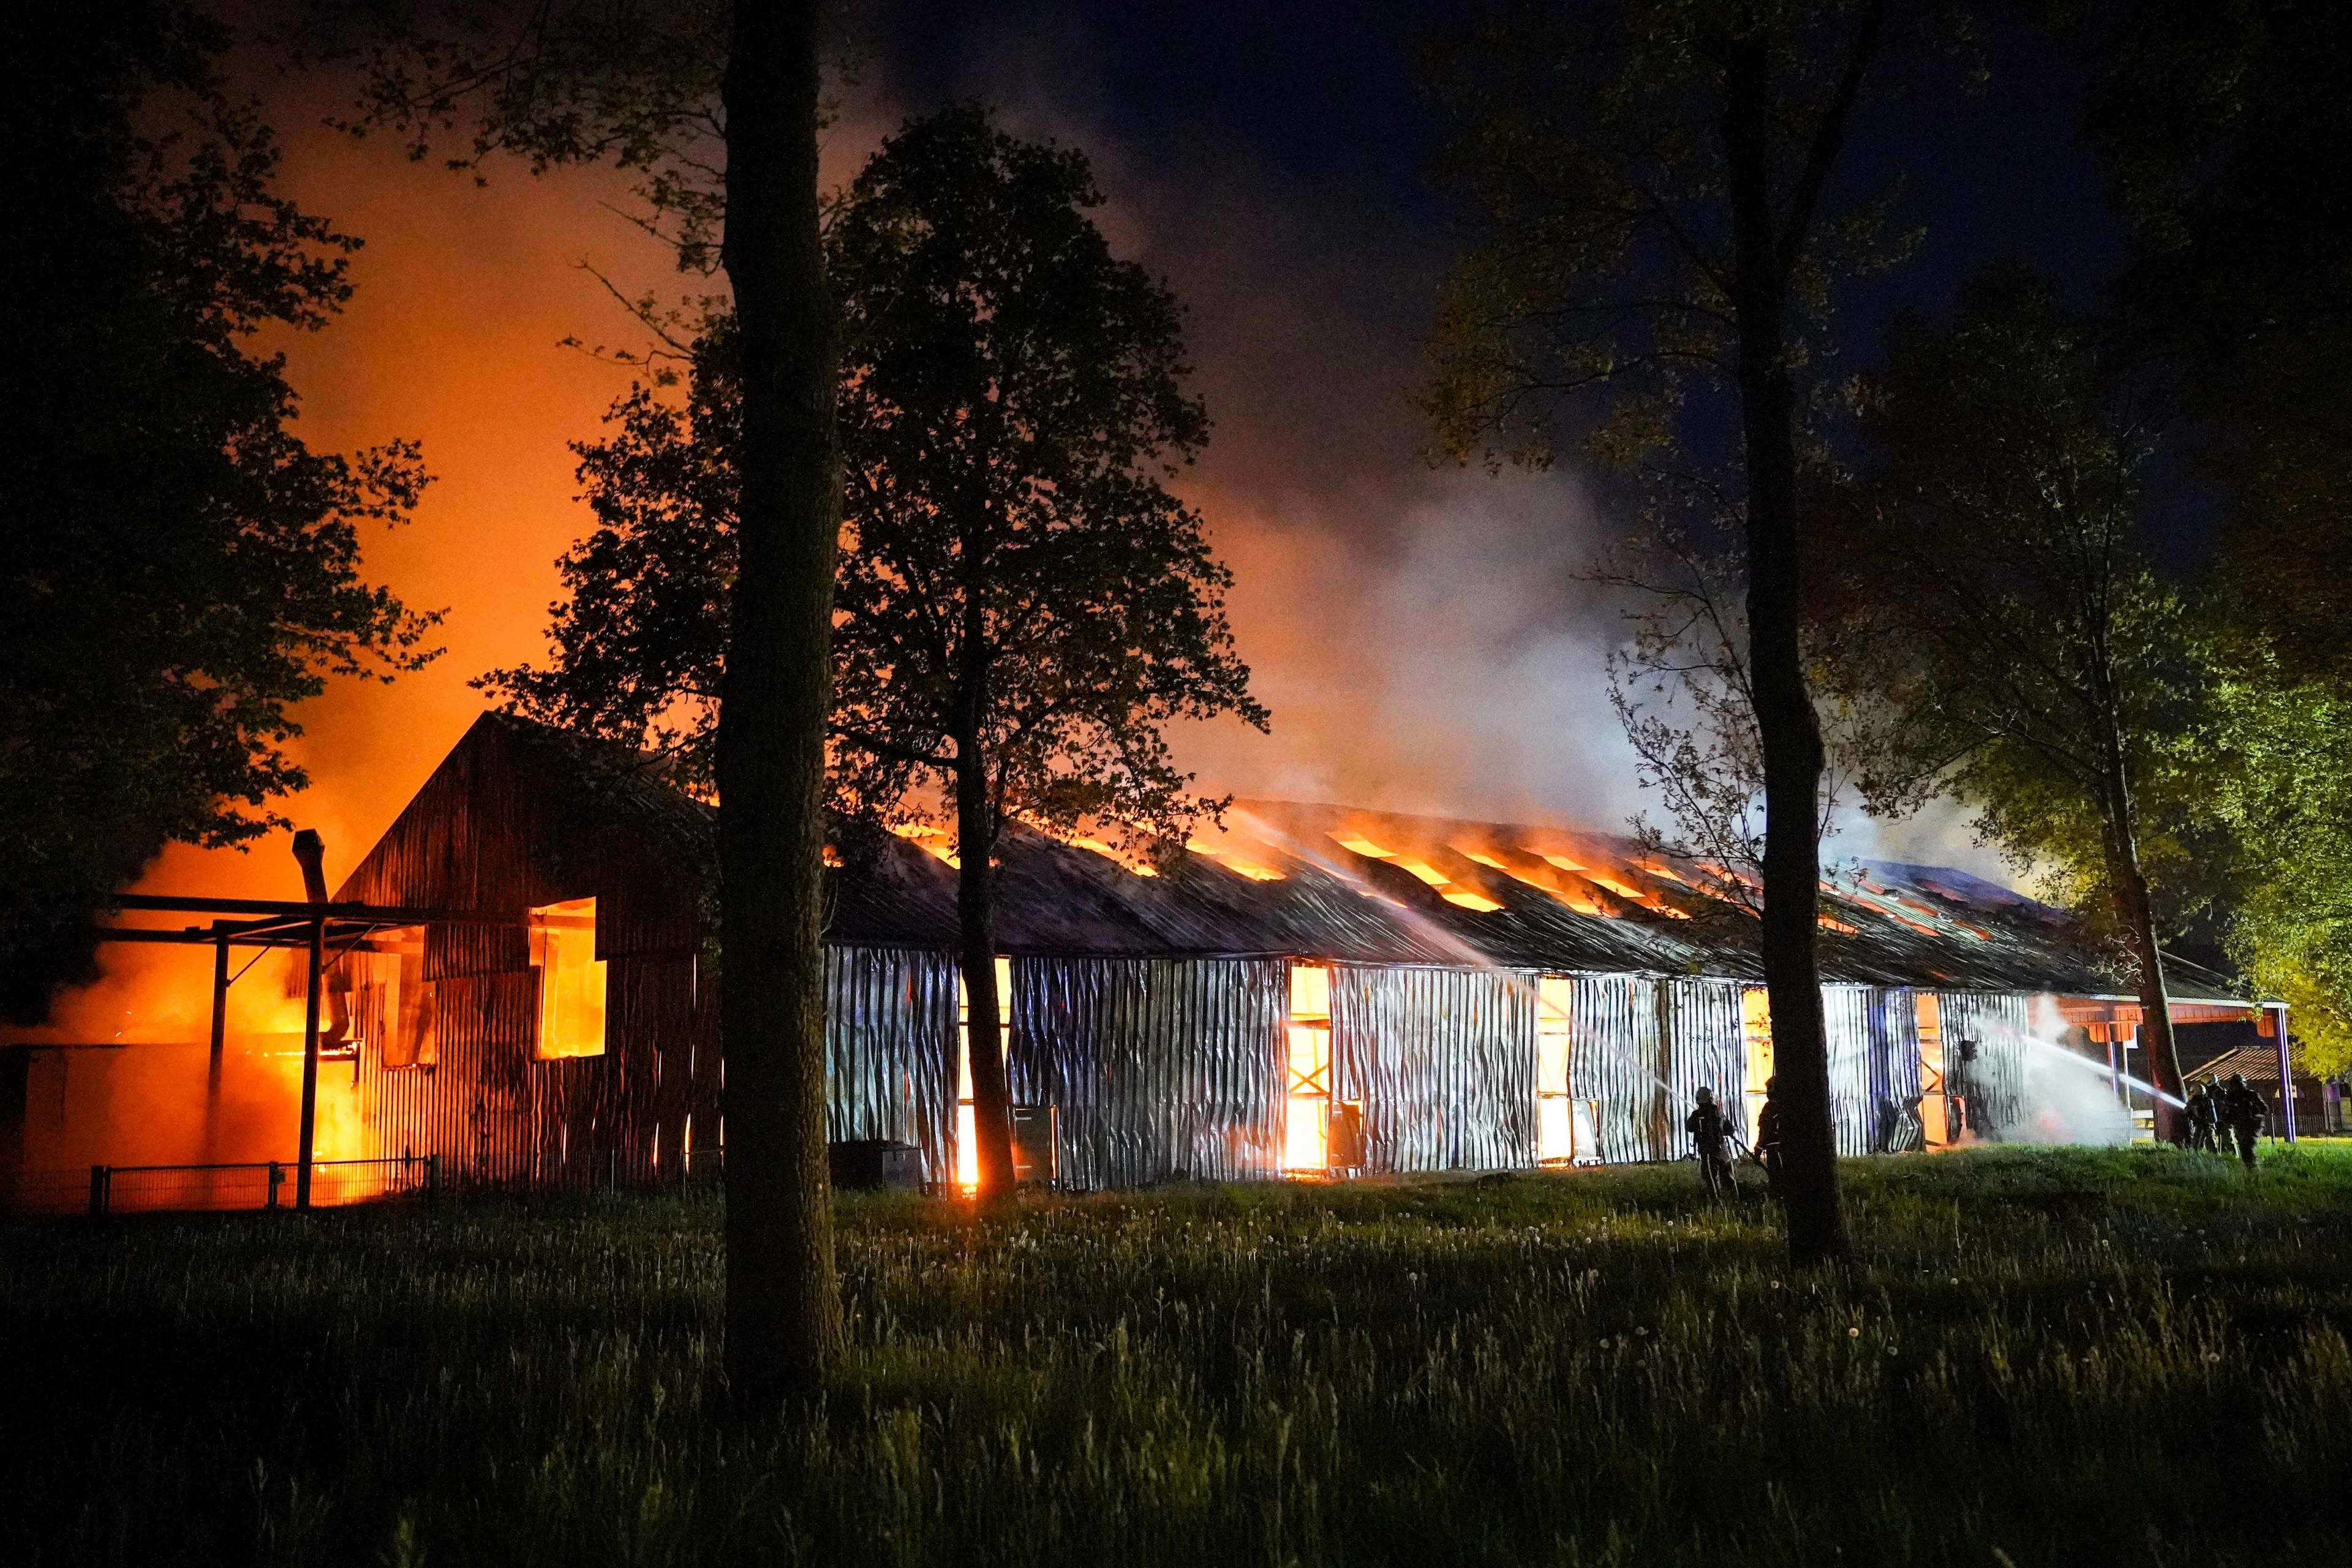 Grote brand verwoest speelparadijs Nienoord, familiepark komende dagen dicht